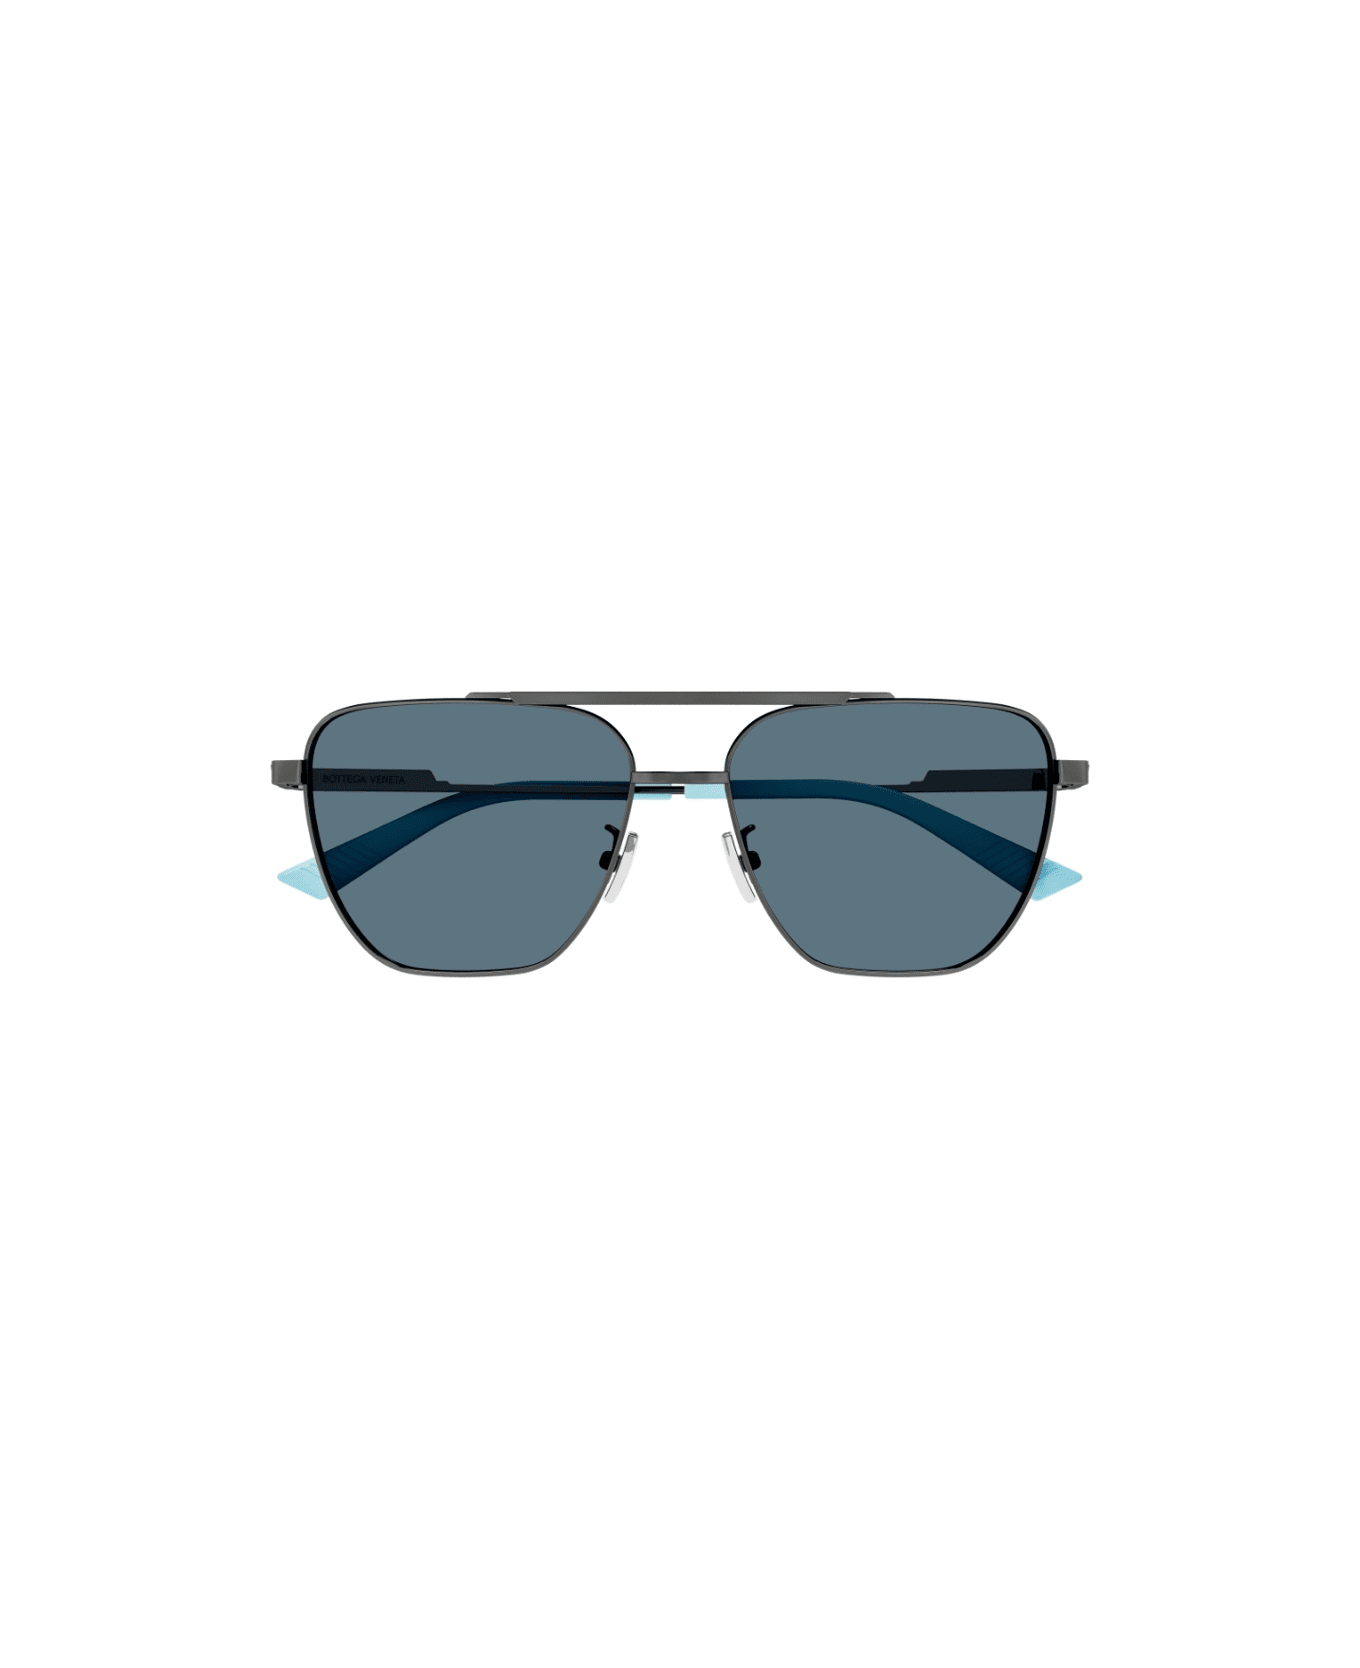 Bottega Veneta Eyewear BV1236s 004 Sunglasses サングラス